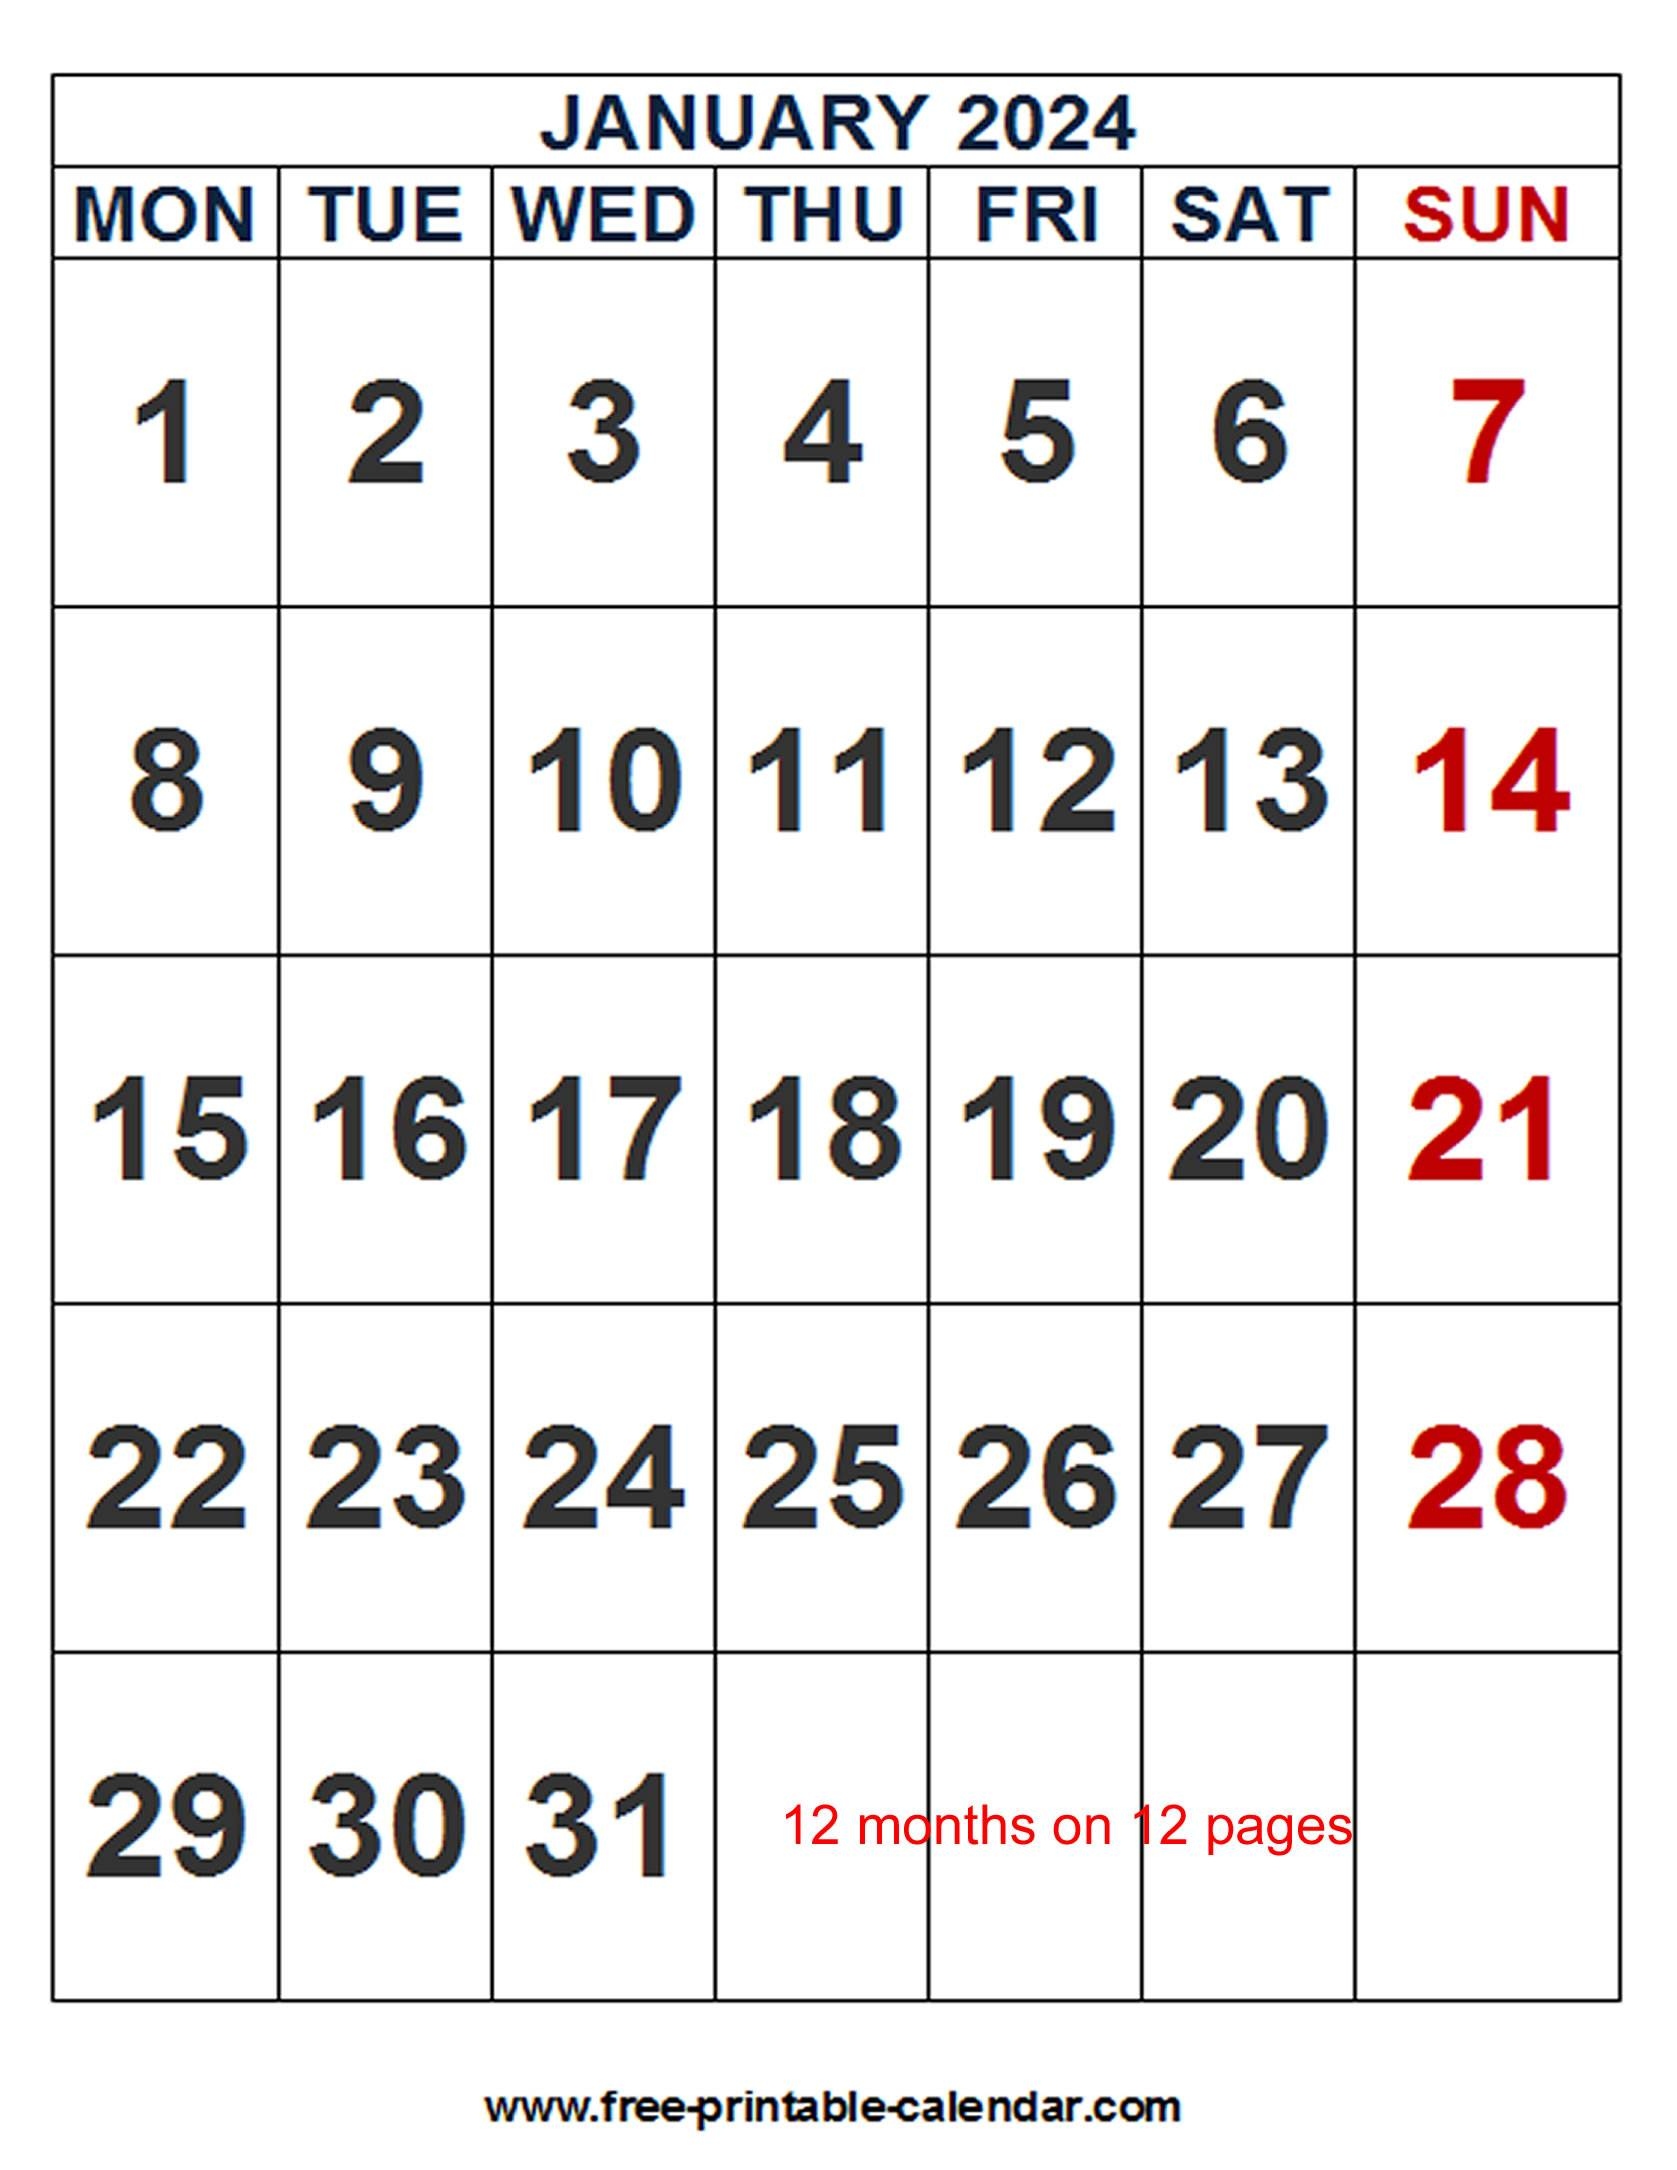 2024 Calendar Word Template - Free-Printable-Calendar with regard to Free Printable Calendar 2024 Word